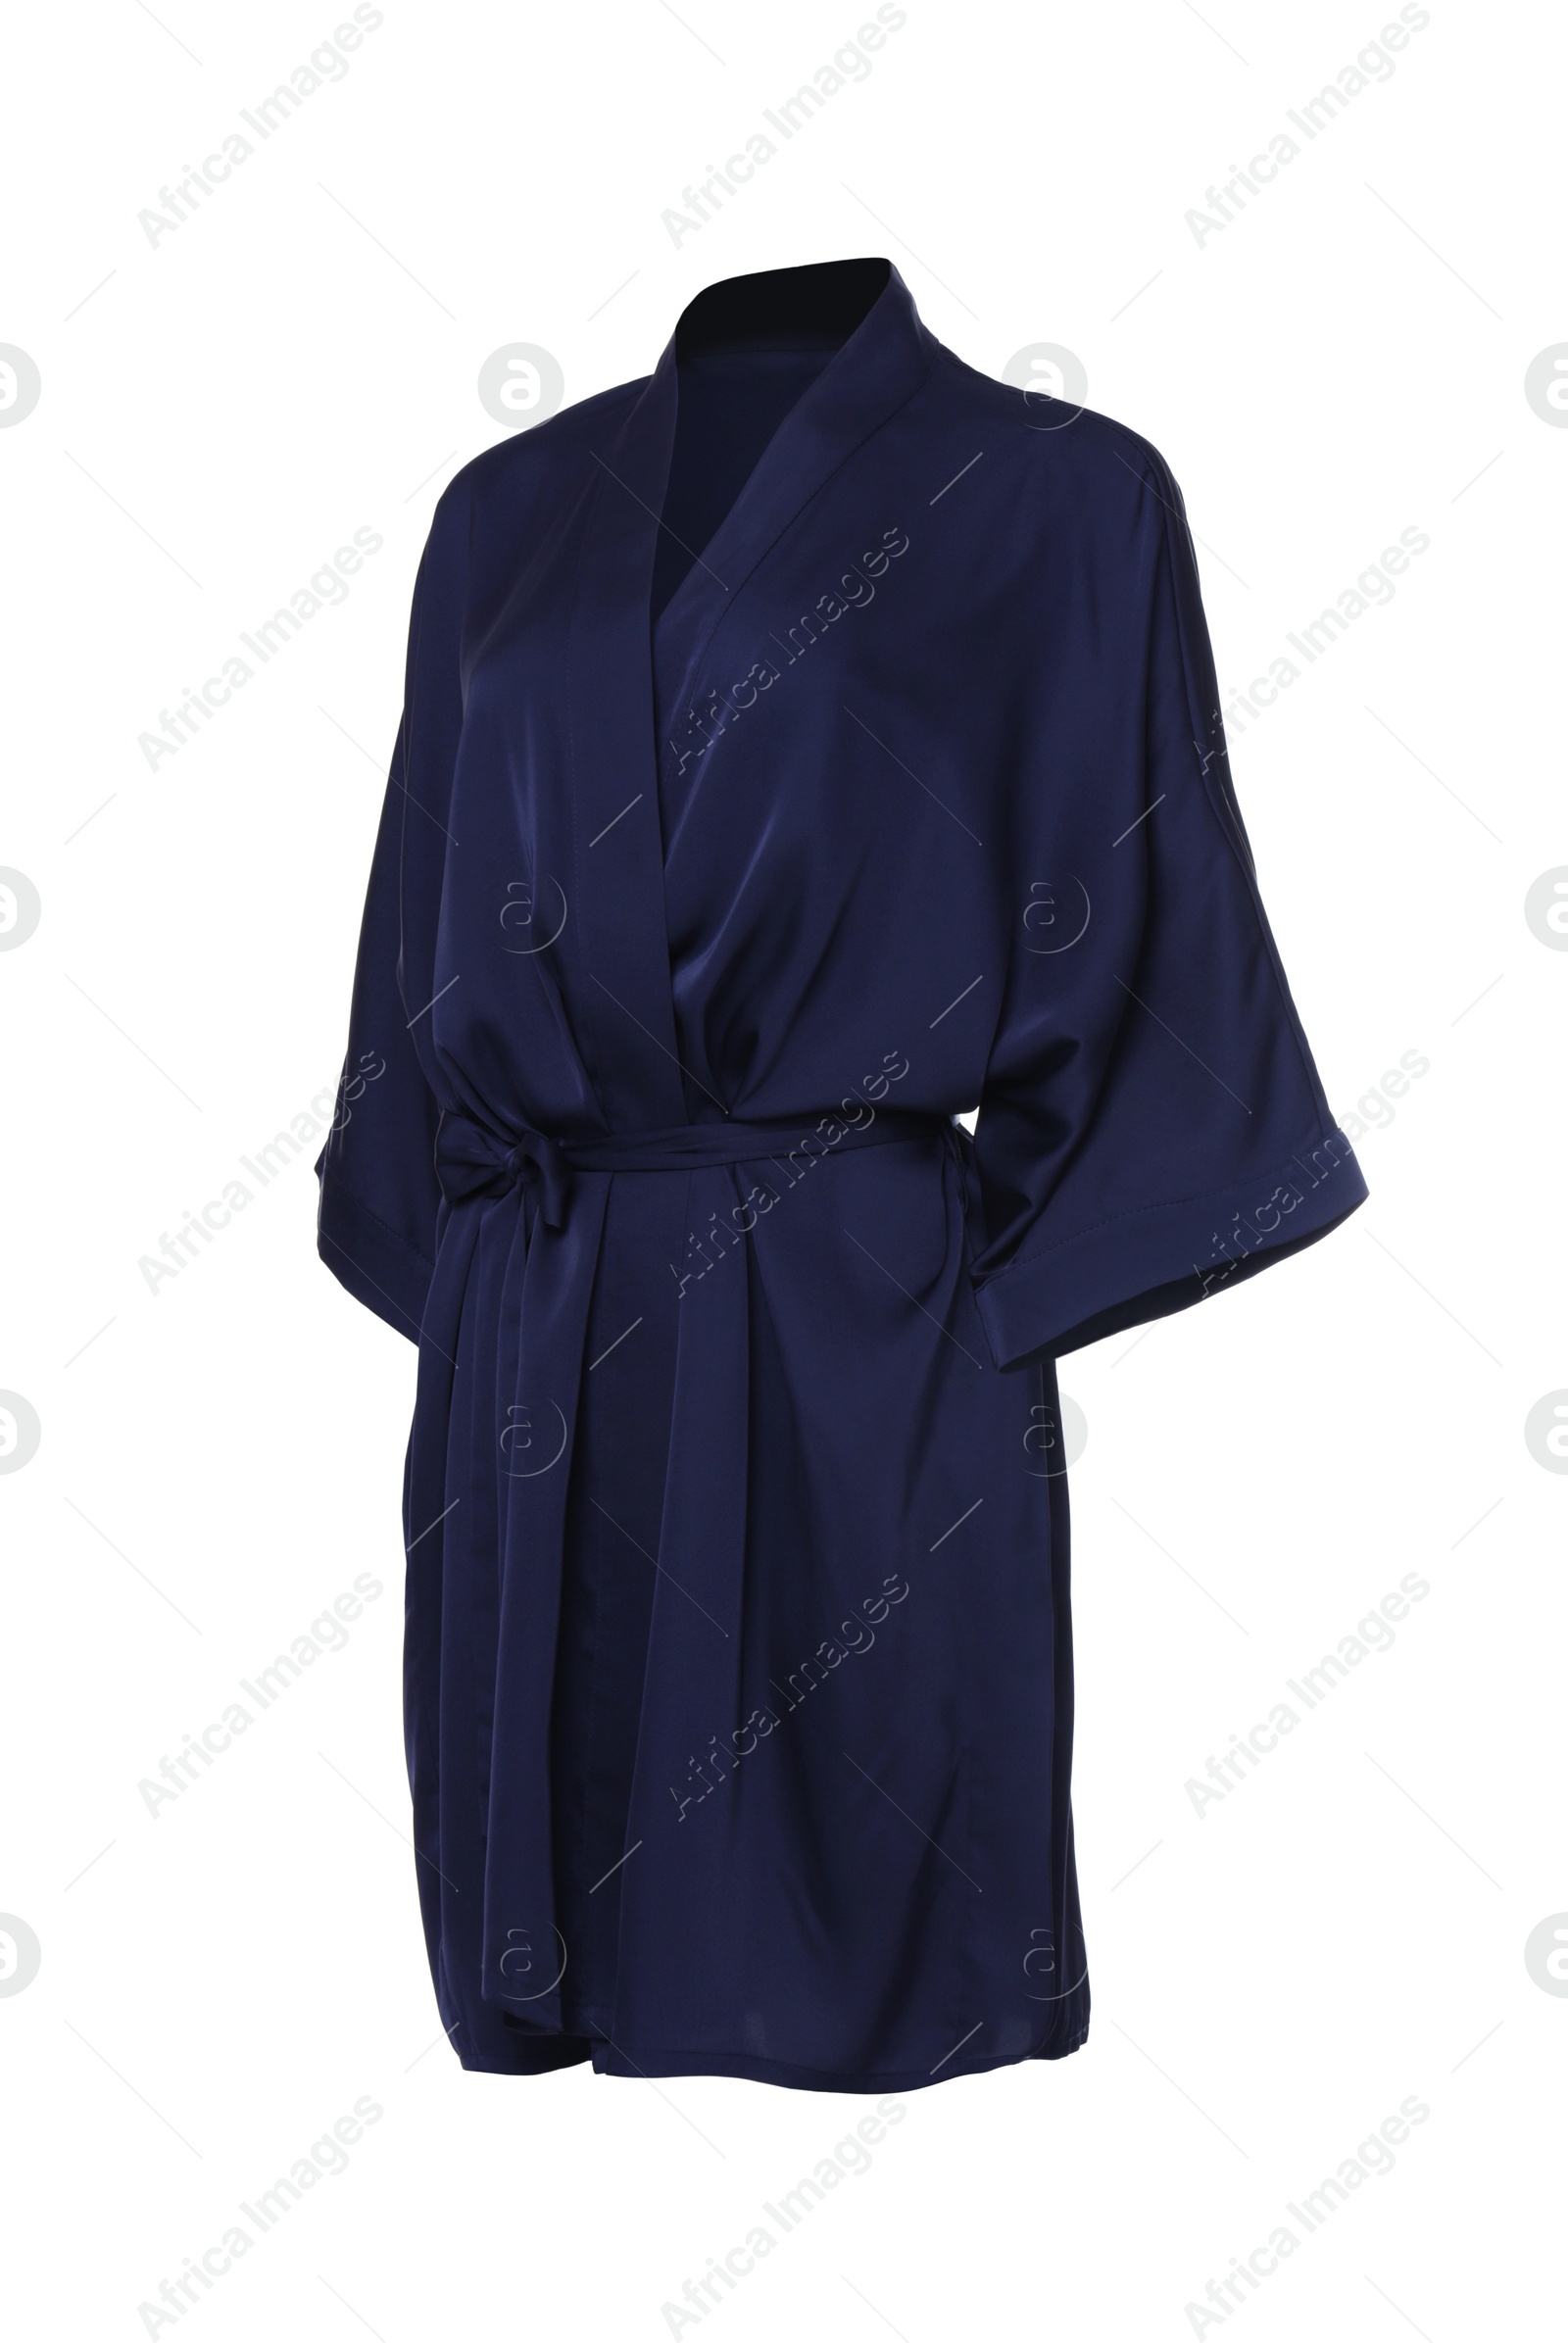 Image of Dark blue silk bathrobe isolated on white